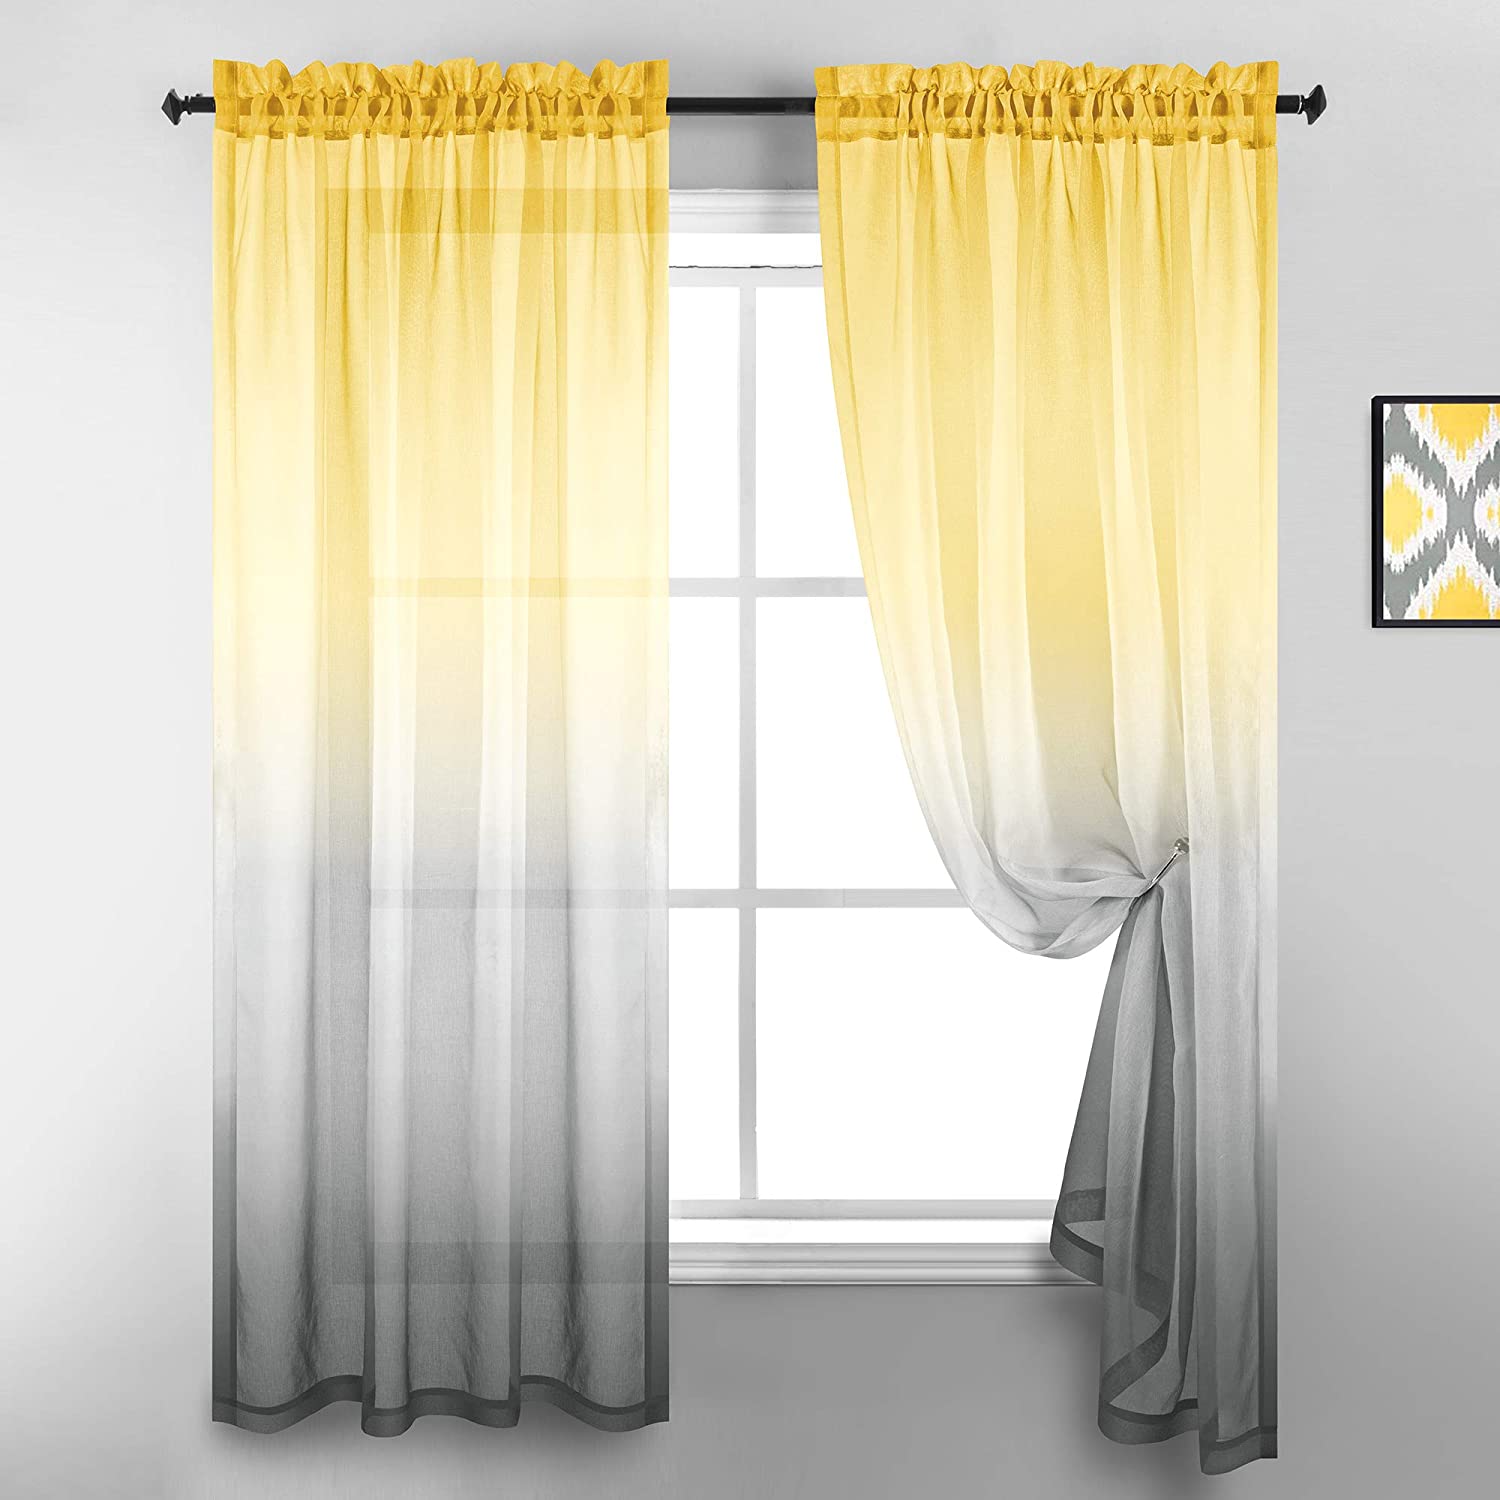 Faux Linen Ombre Sheer Curtains, 2 panels